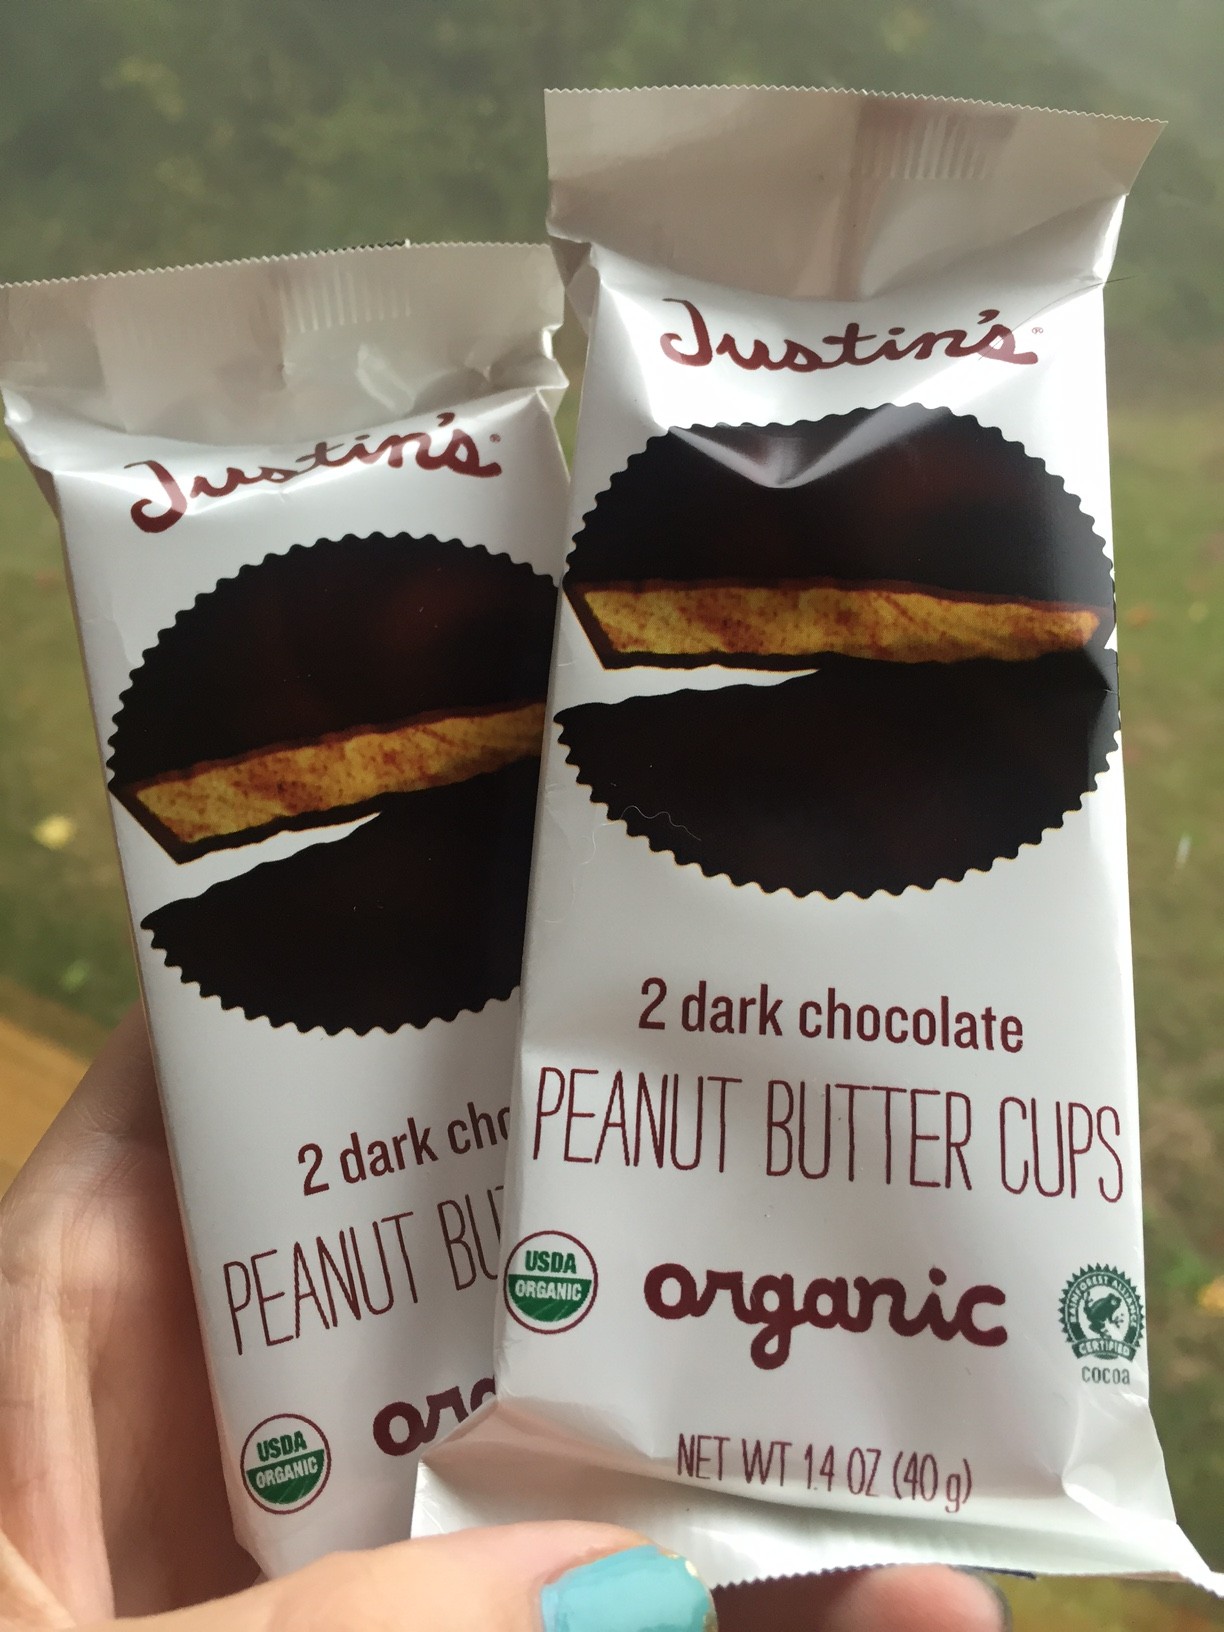 justin's organic peanut butter cups